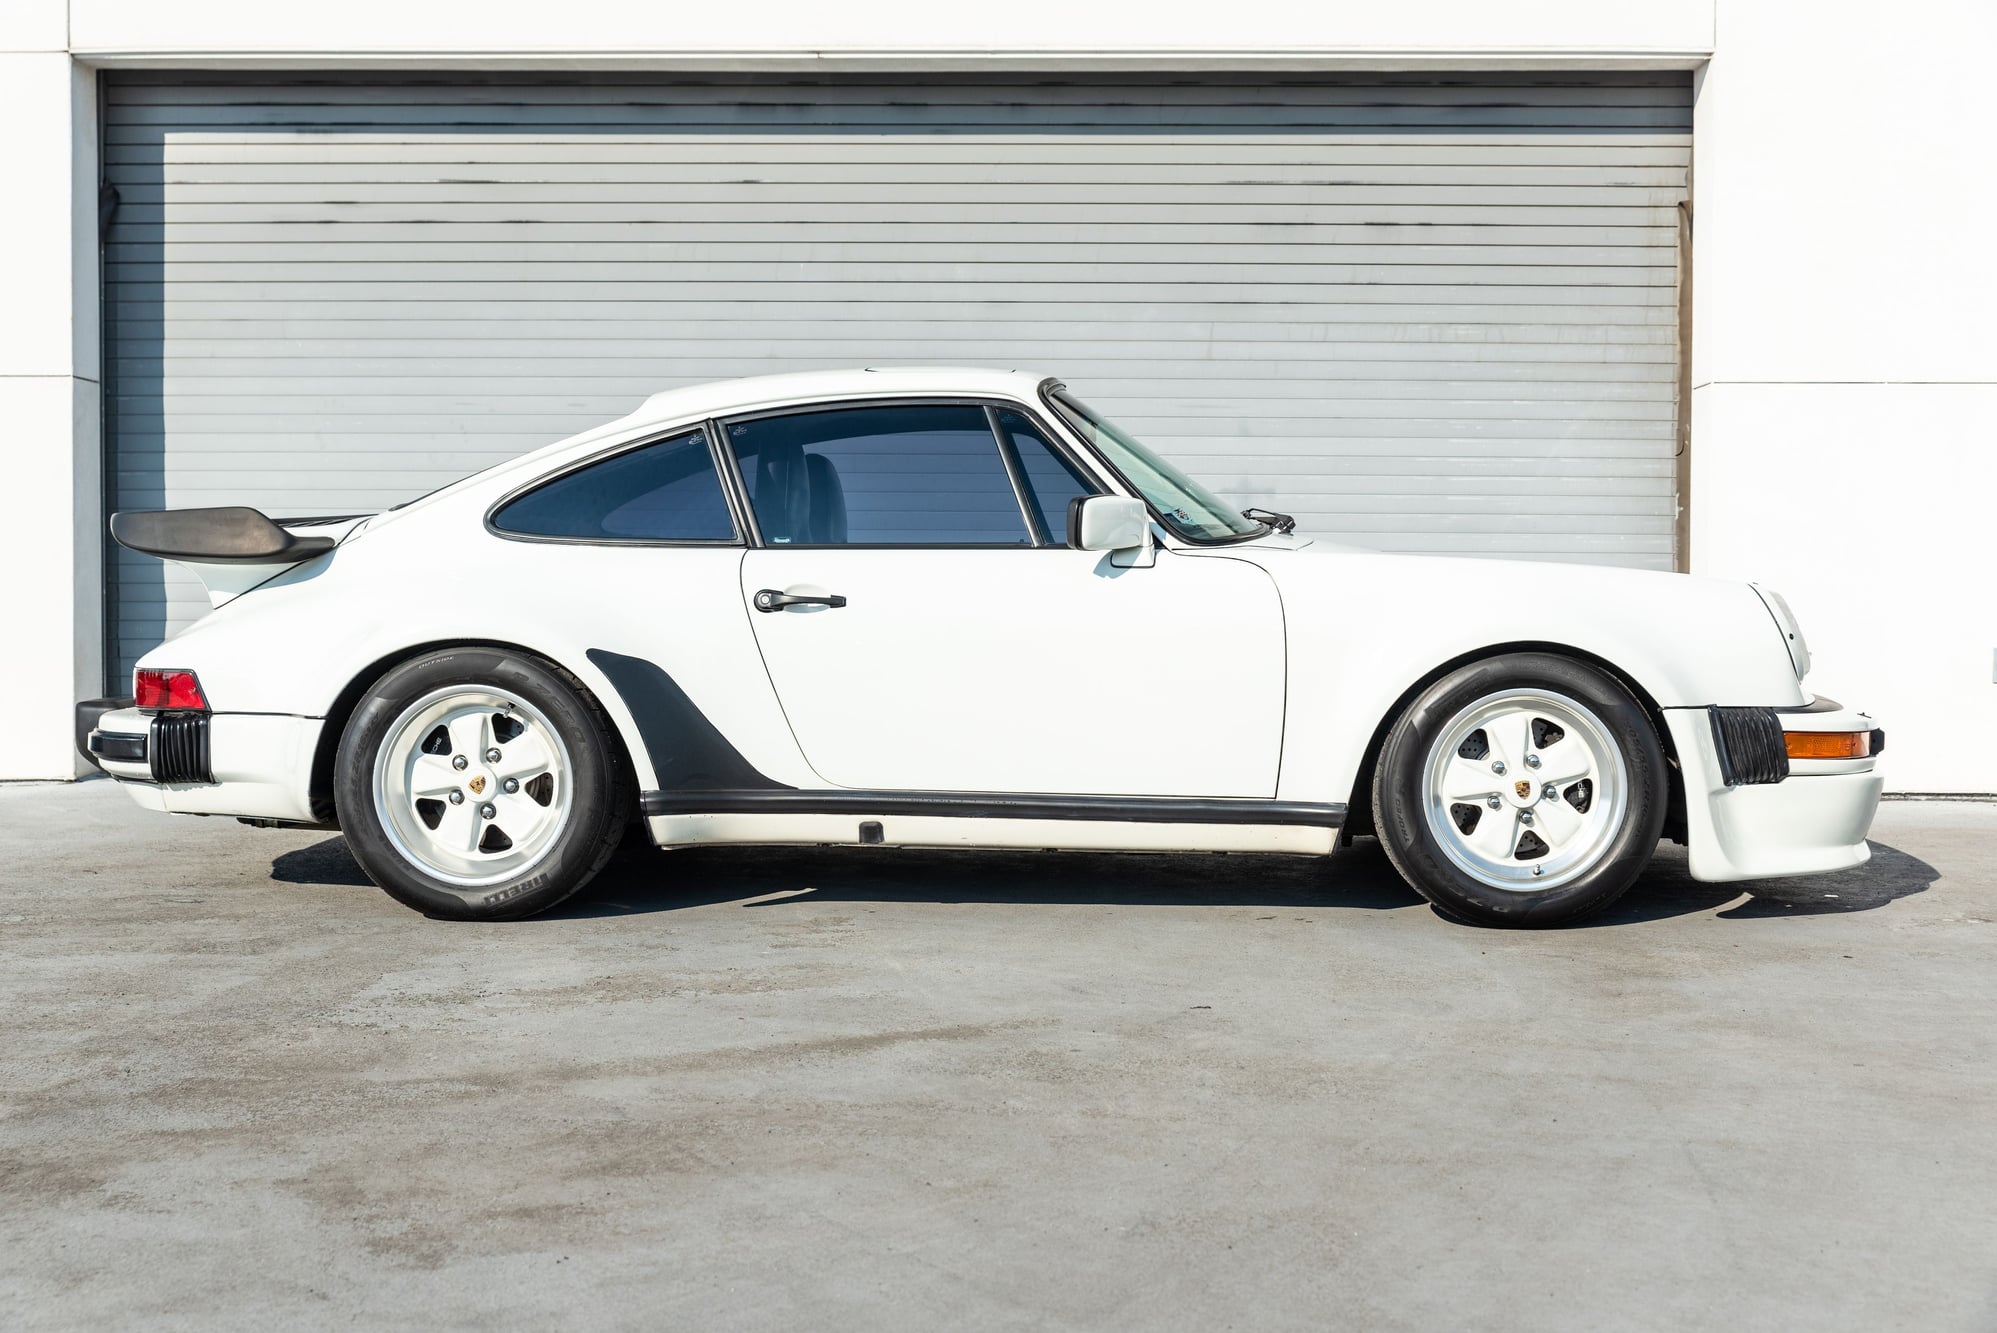 1986 Porsche 911 - Grand Prix White 930 Turbo - Used - VIN WP0JB0939GS051202 - 80,049 Miles - 6 cyl - 2WD - Manual - Coupe - White - Fresno, CA 93650, United States